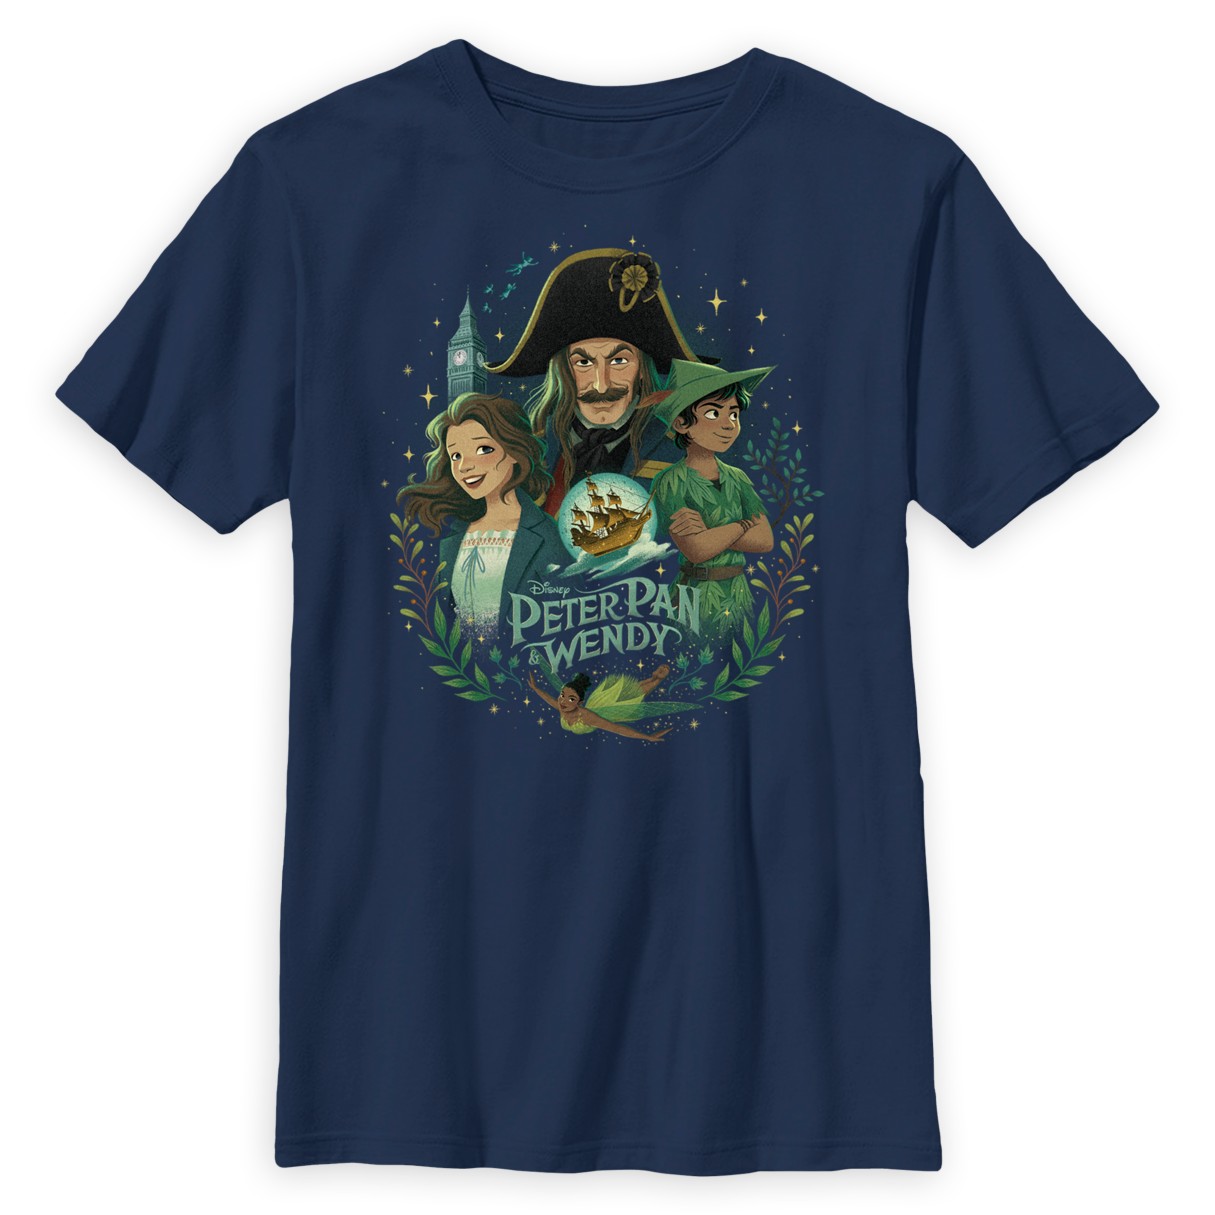 Peter Pan & Wendy Action – Cast Live shopDisney Kids for Film T-Shirt 